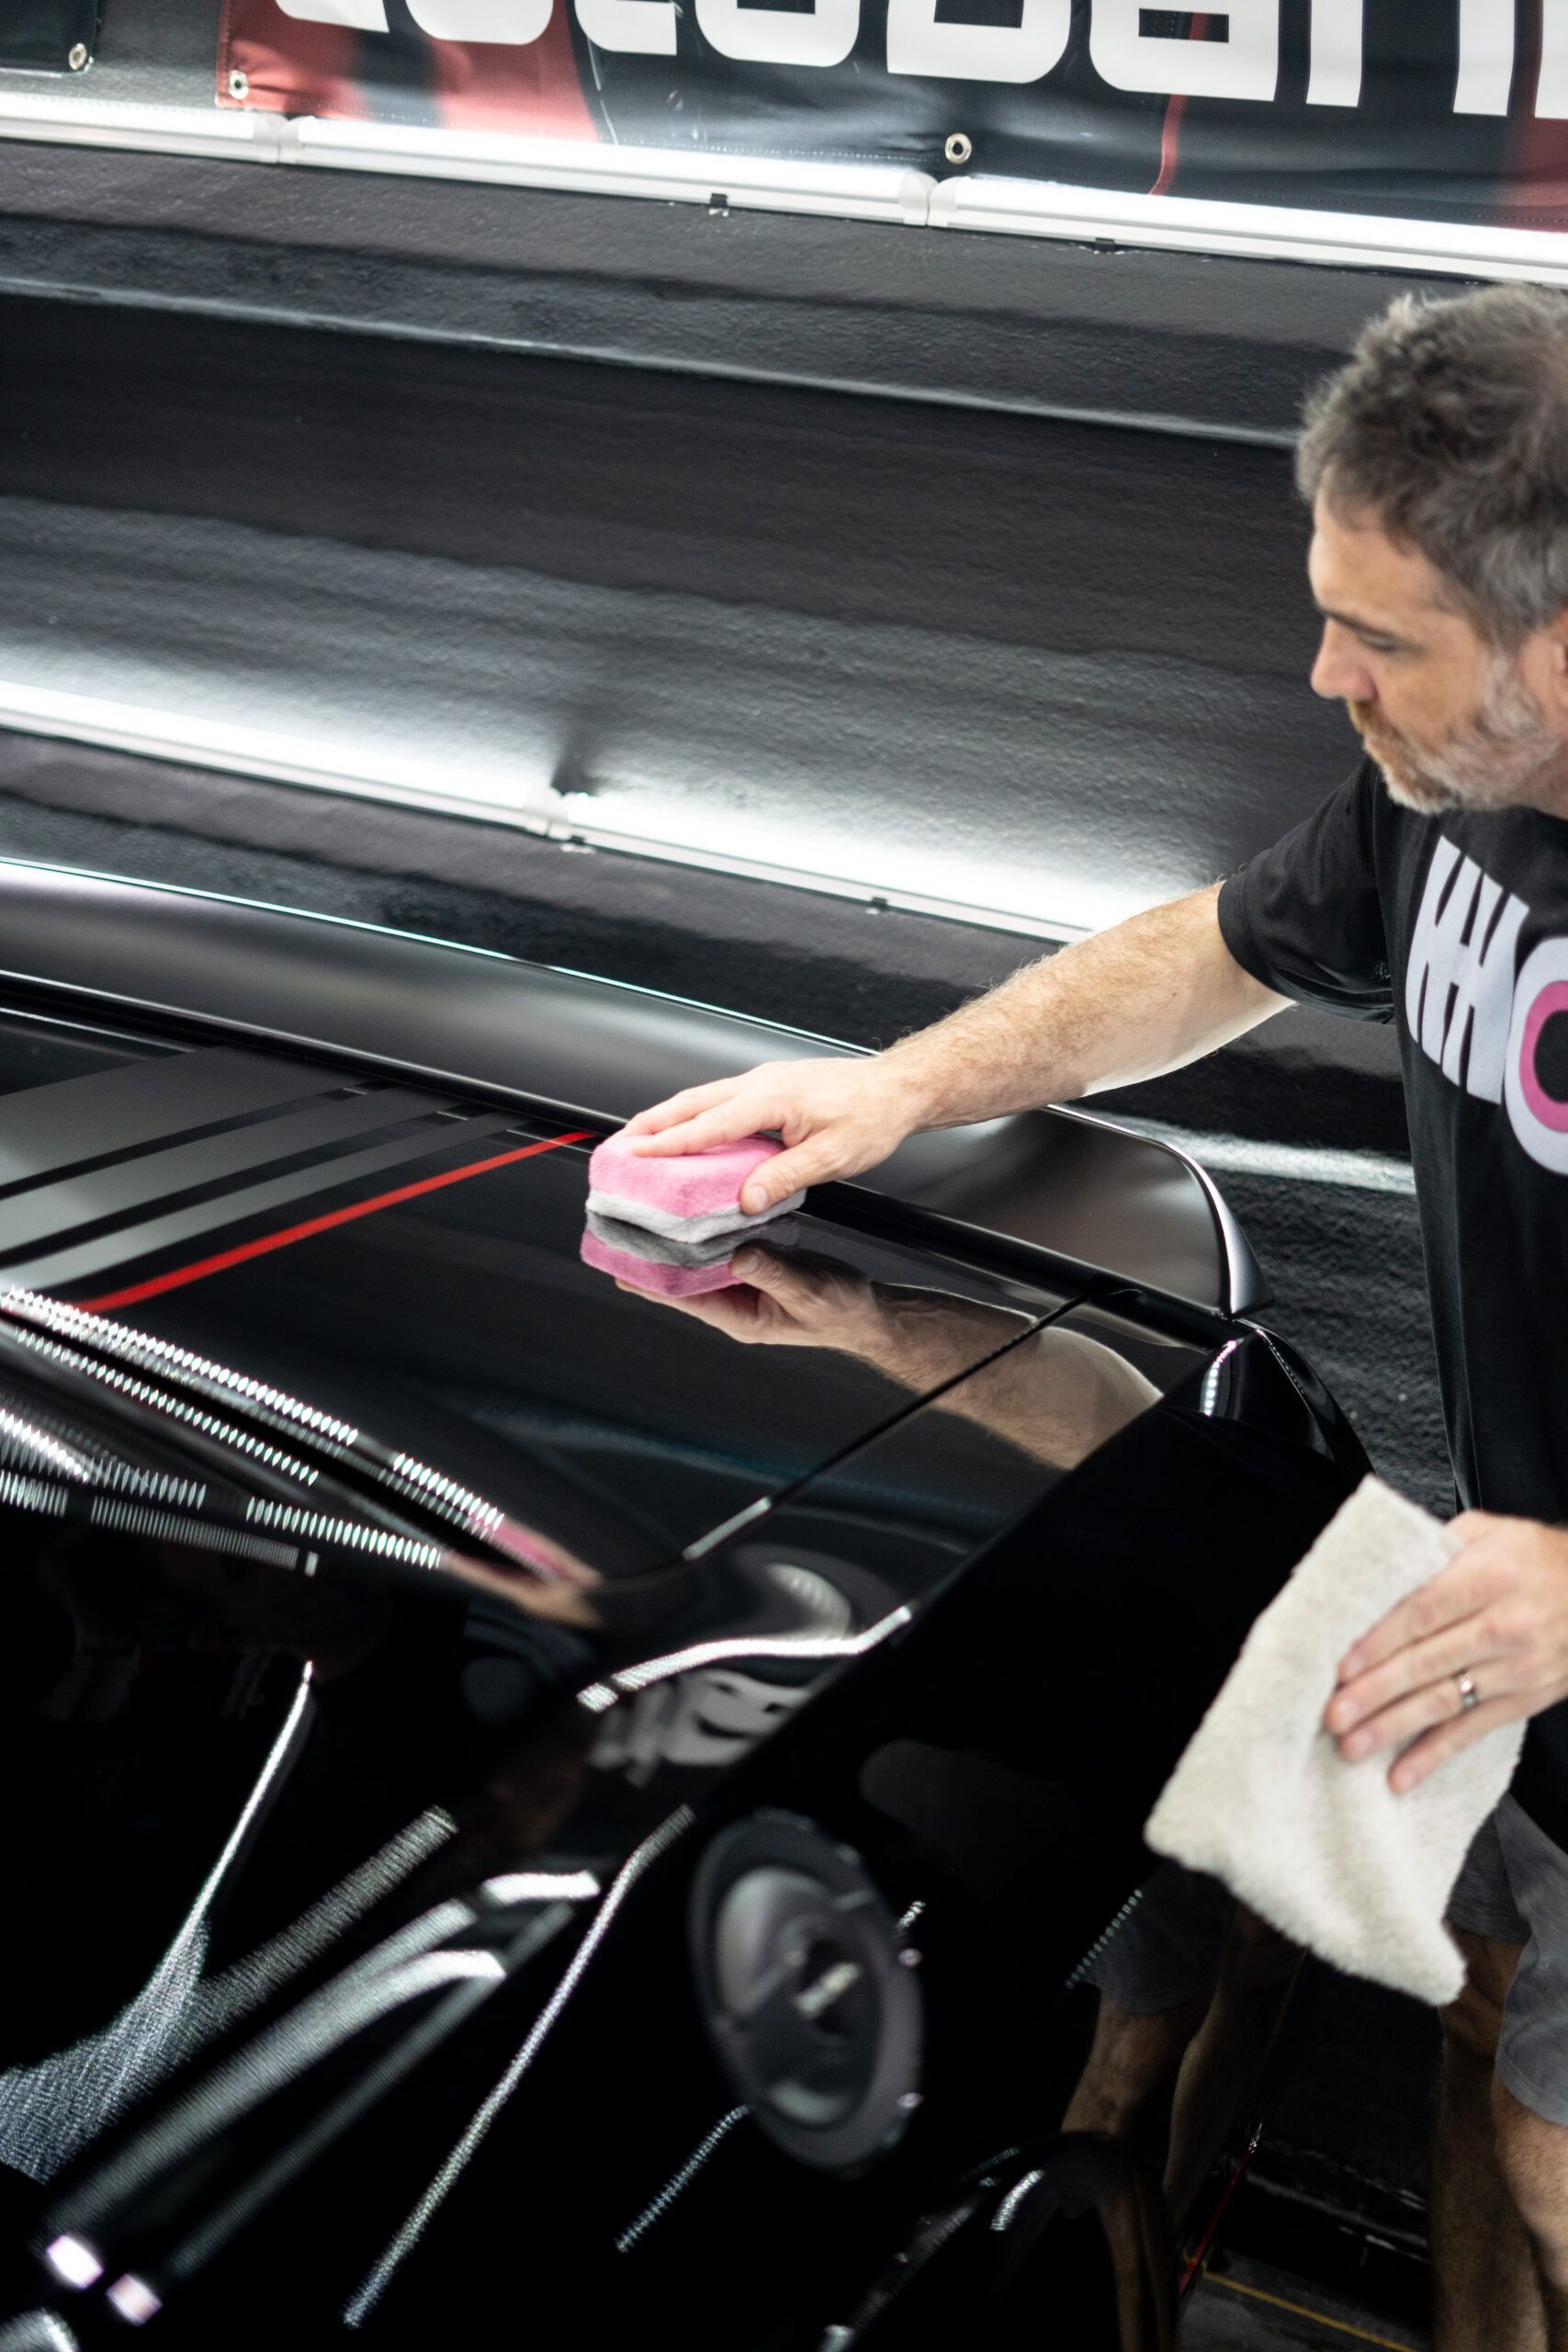 A man is polishing a black car with a pink sponge.